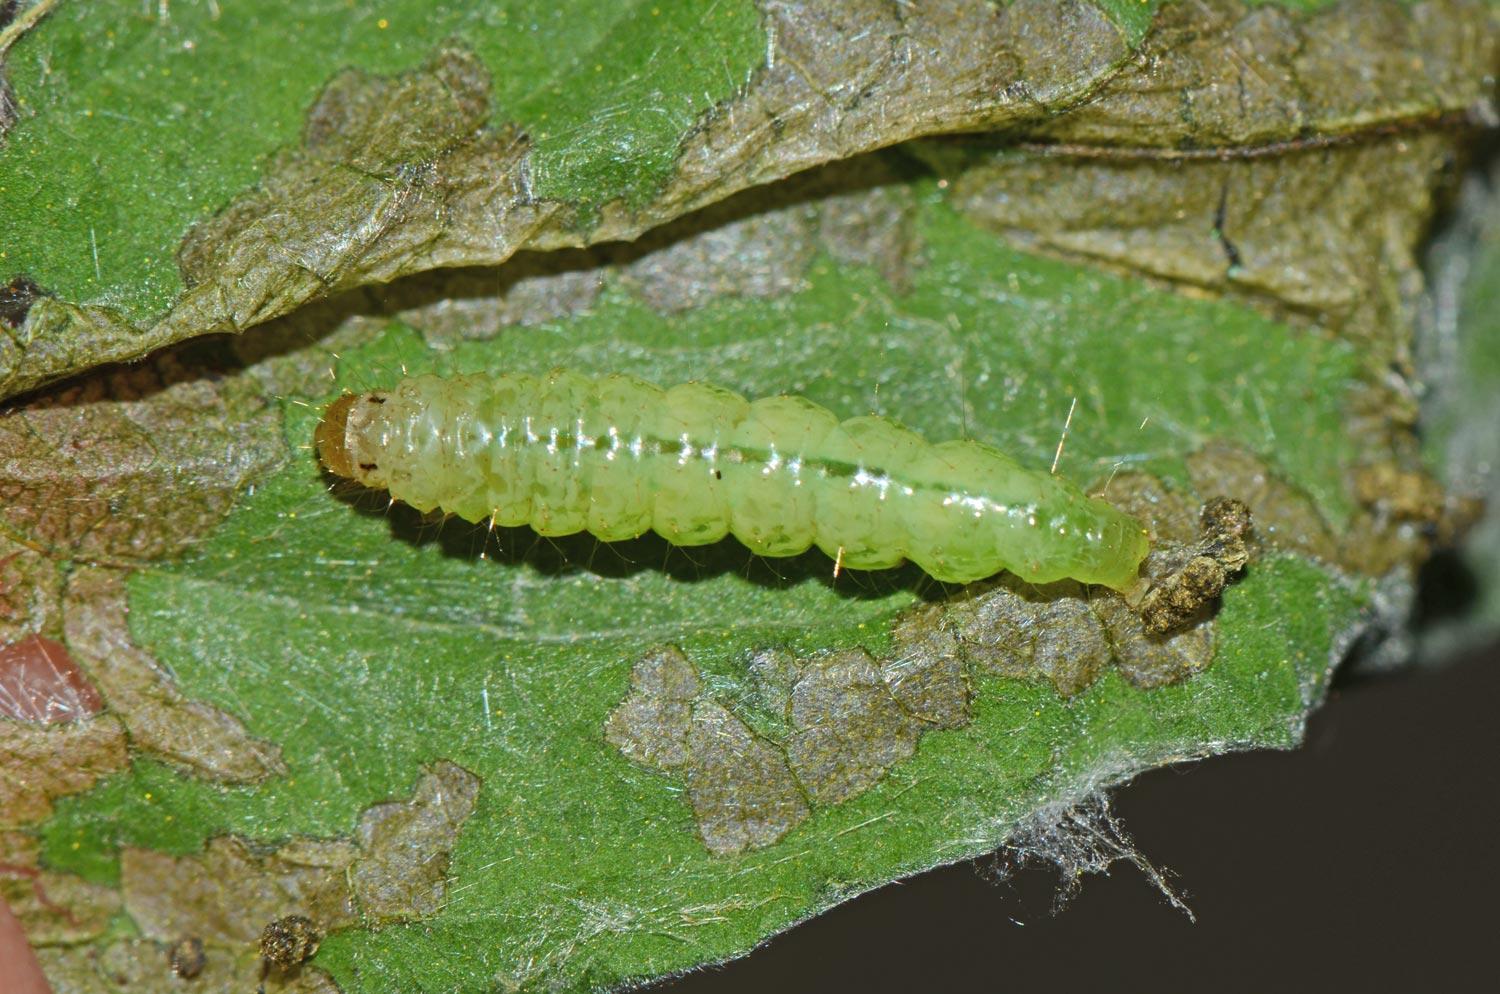 Larva on leaf showing symptoms of feeding